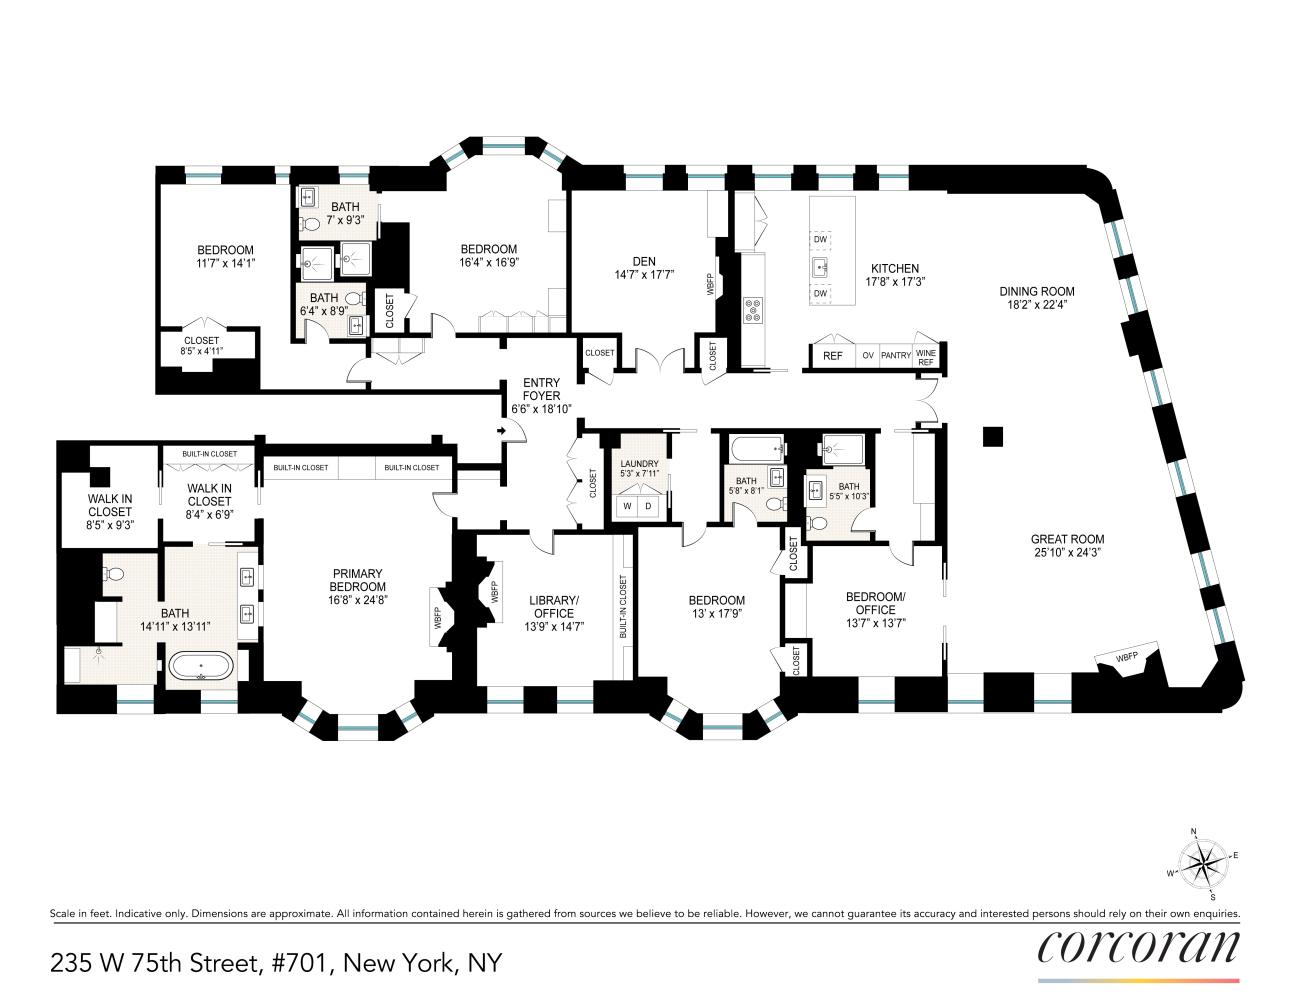 Floorplan for 235 West 75th Street, 701